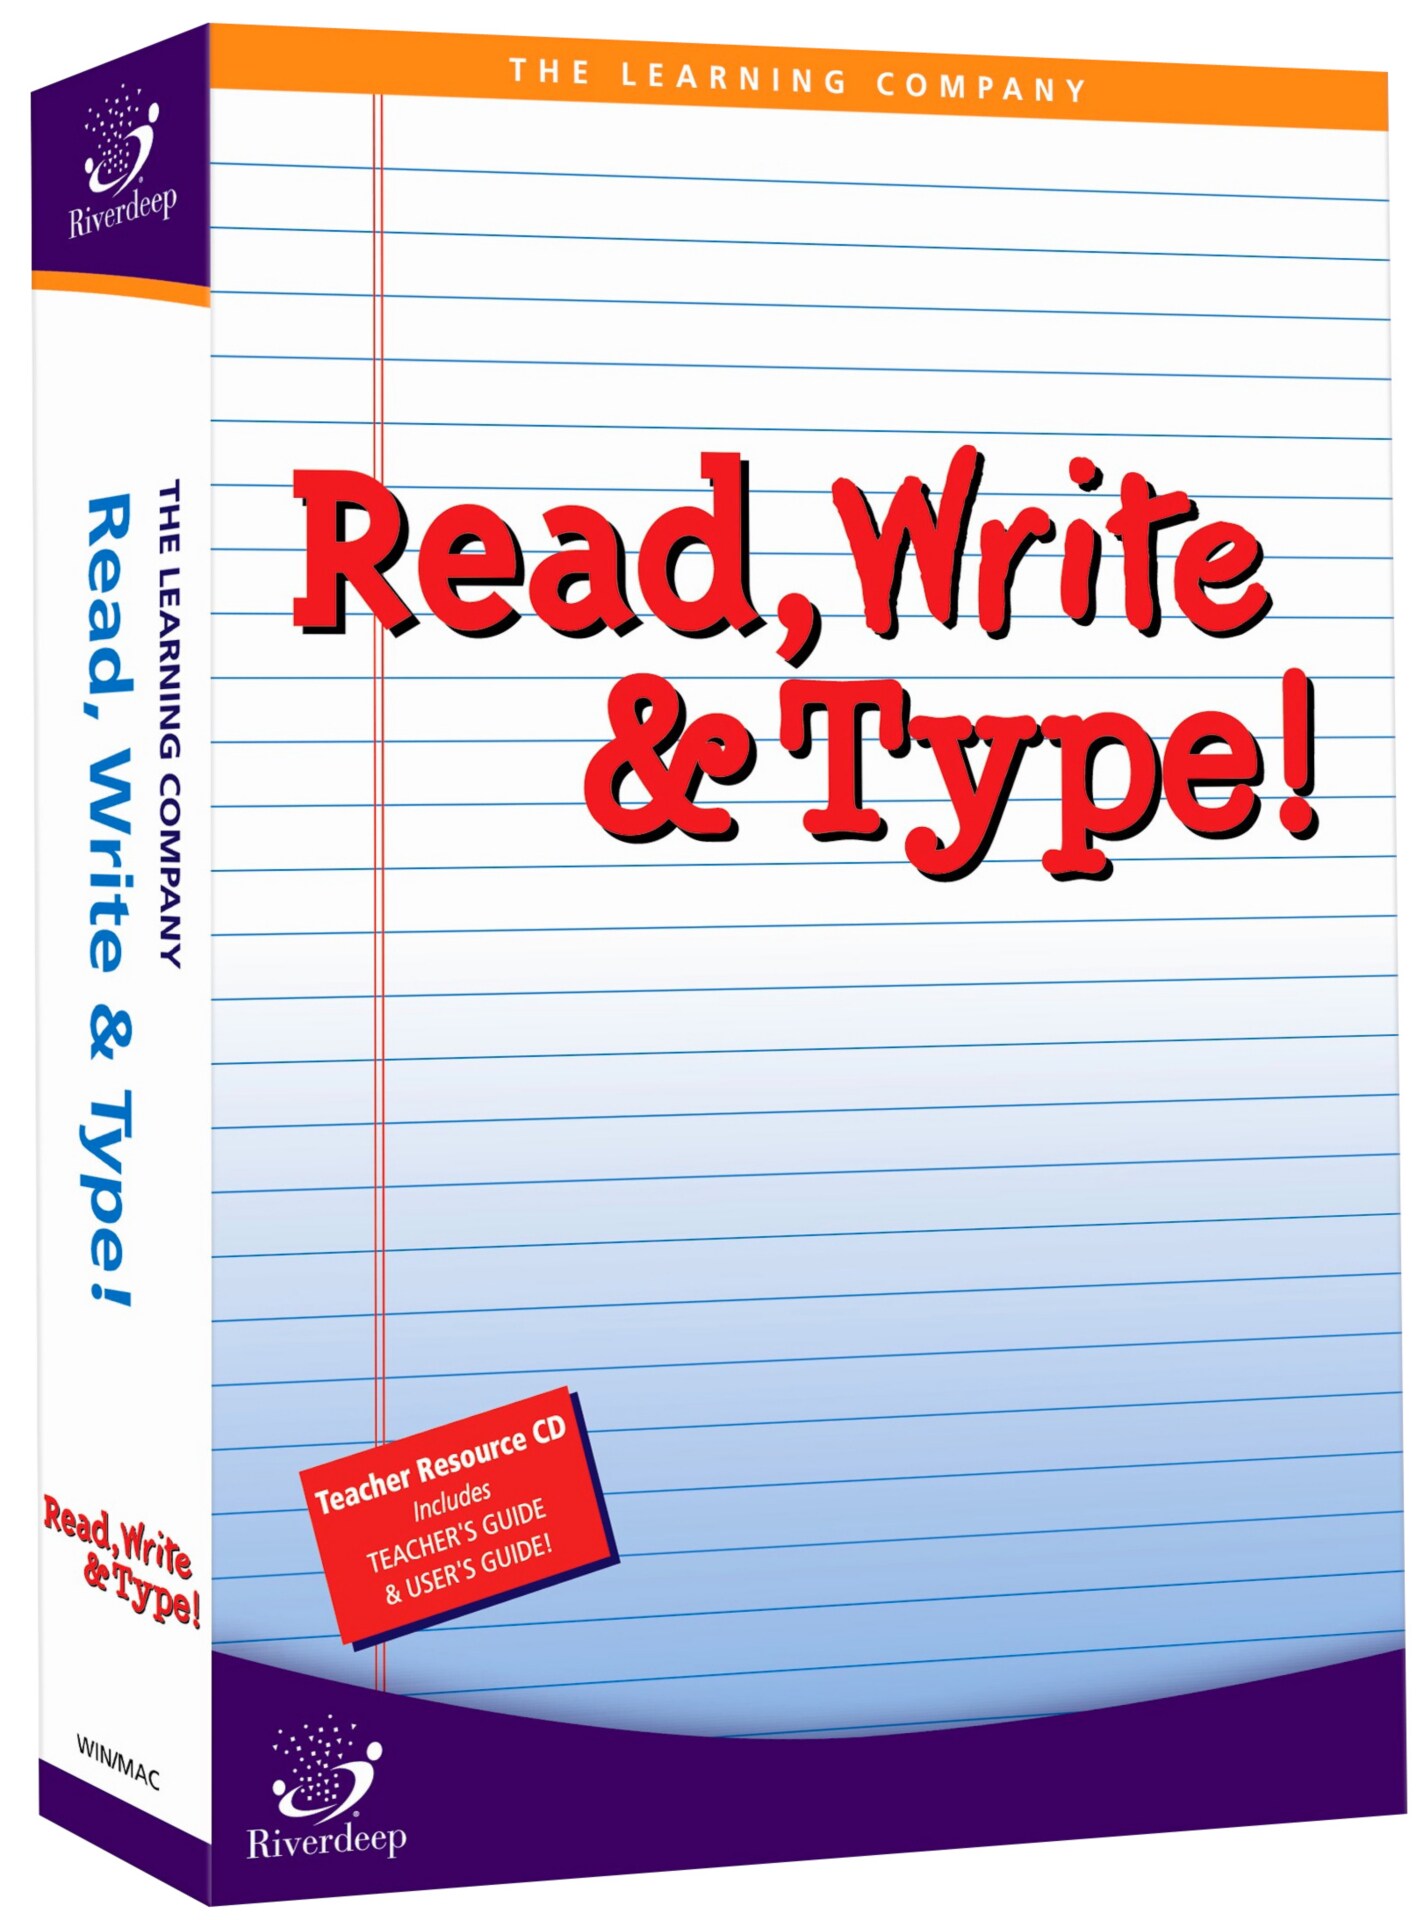 HMH READ WRITE & TYPE V3.1